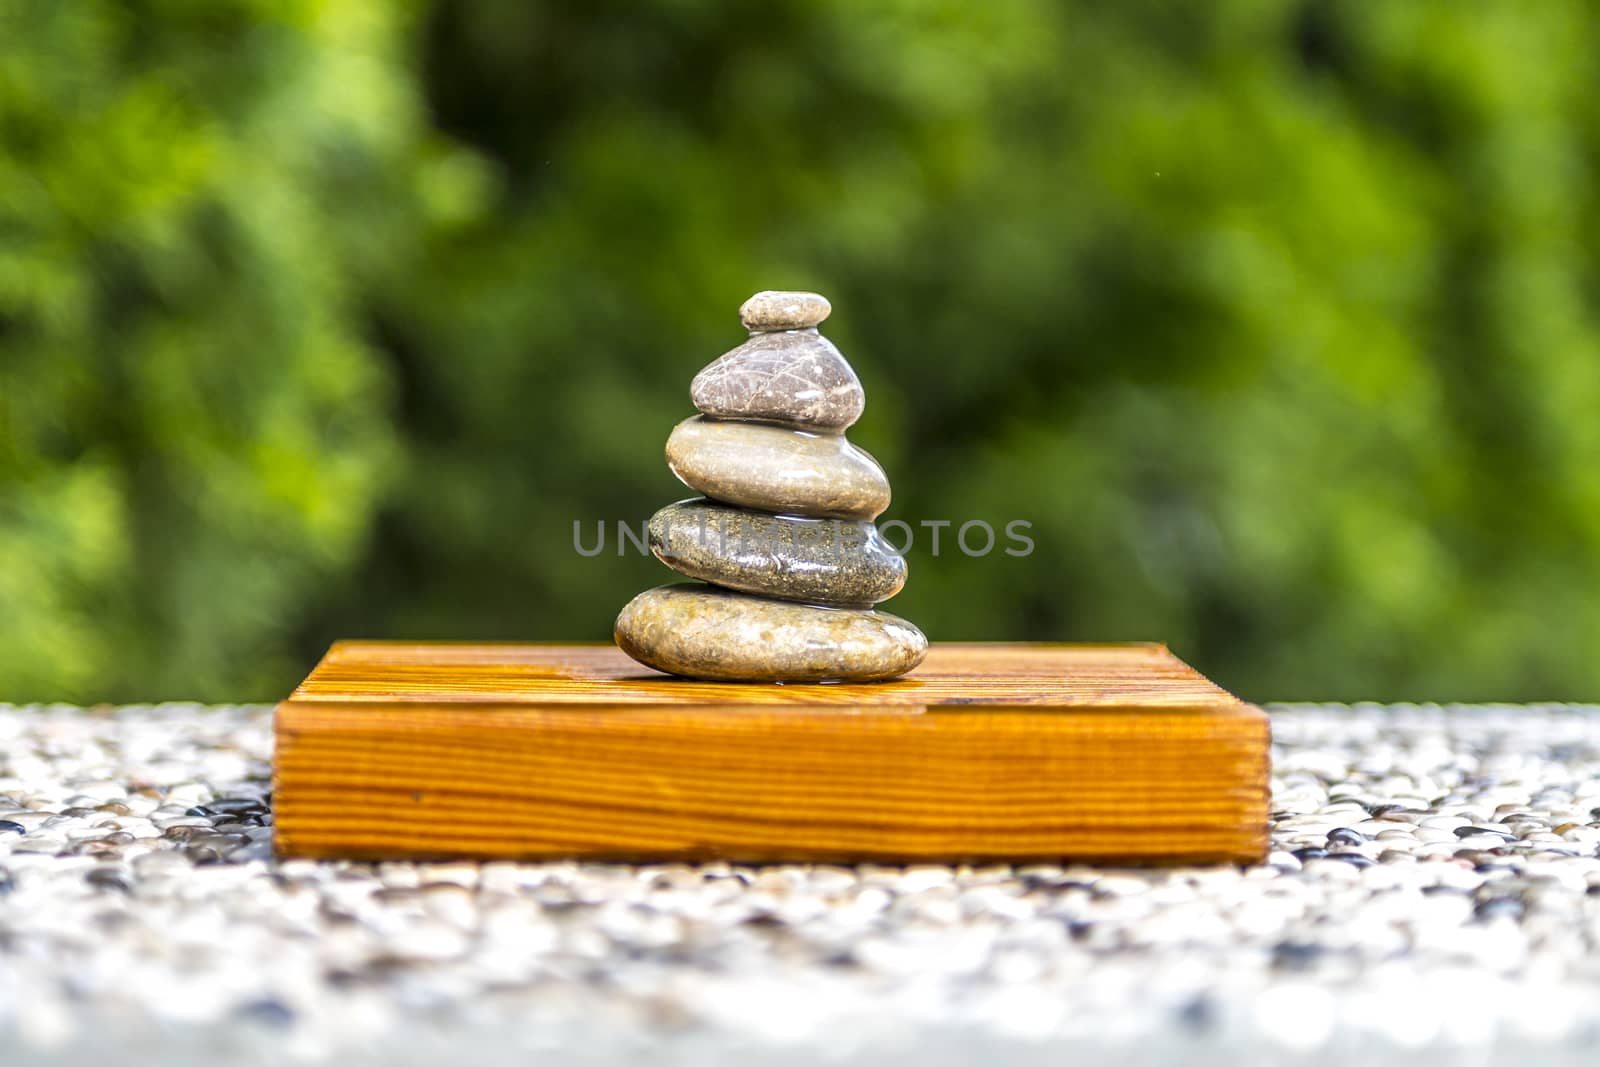 Zen stones on wood by asafaric